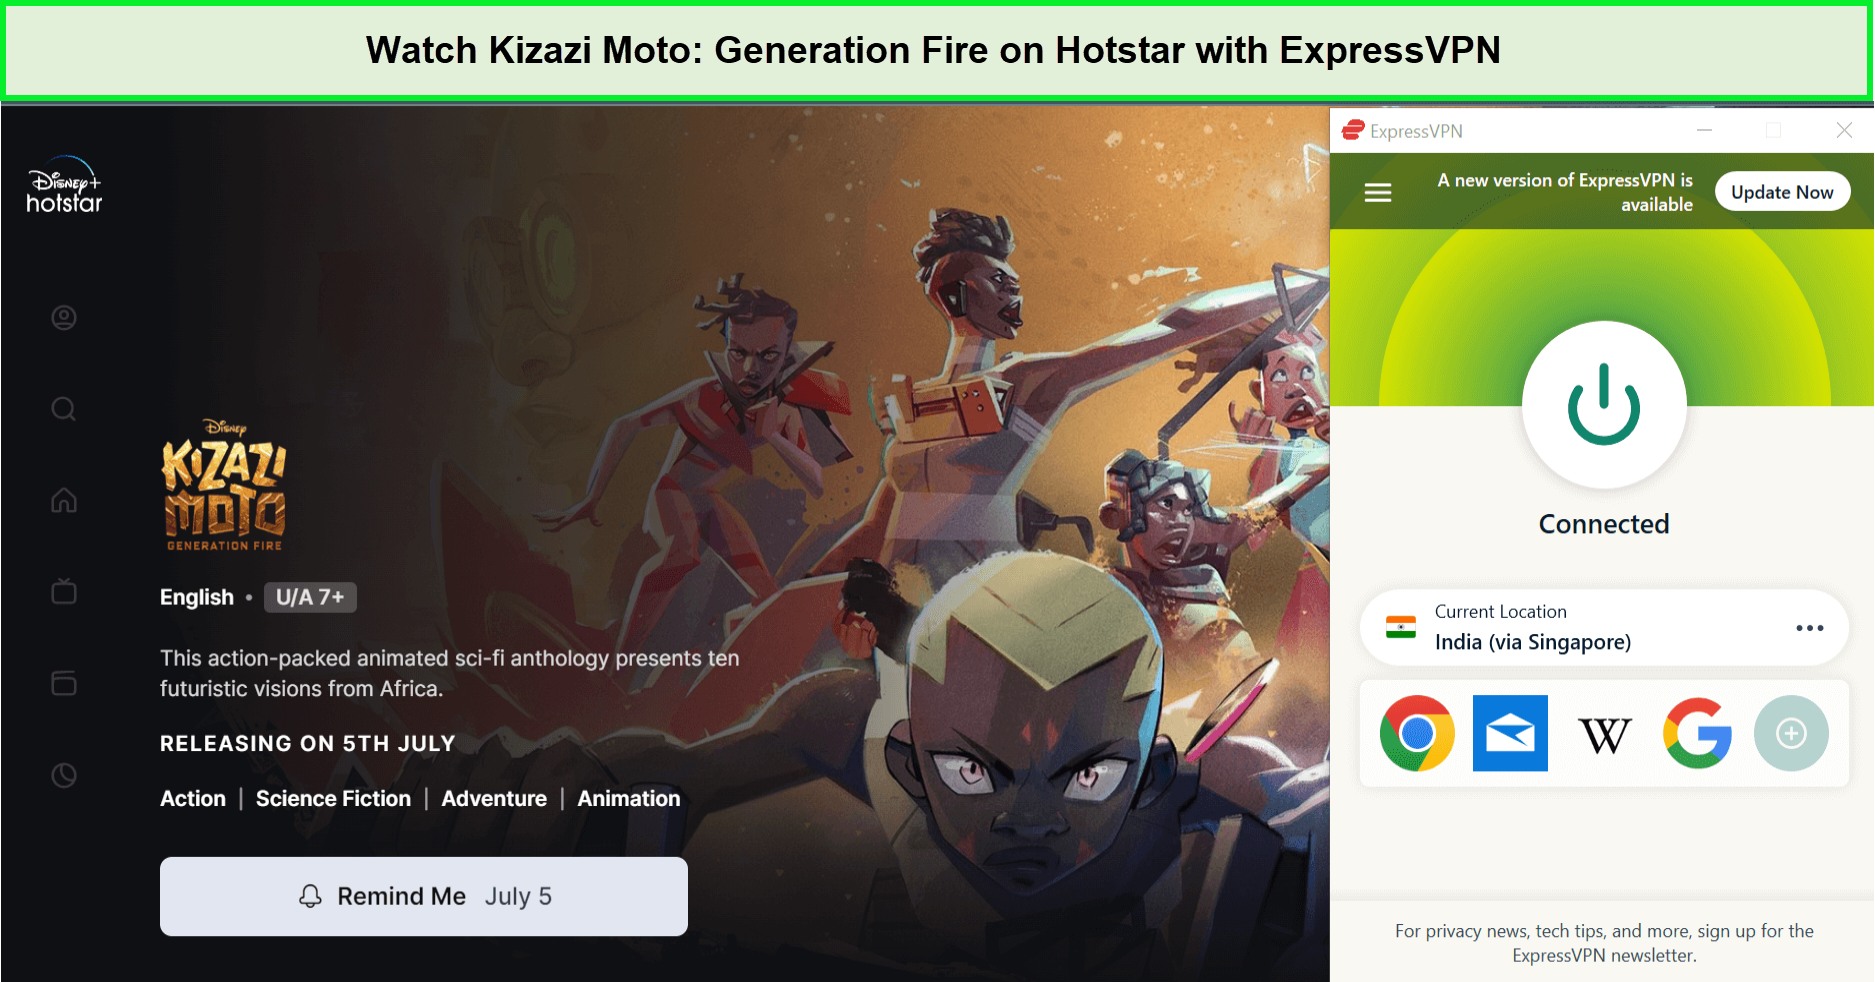 Watch-Kizazi-Moto-Generation-Fire-in-Netherlands-on-Hotstar-with-ExpressVPN